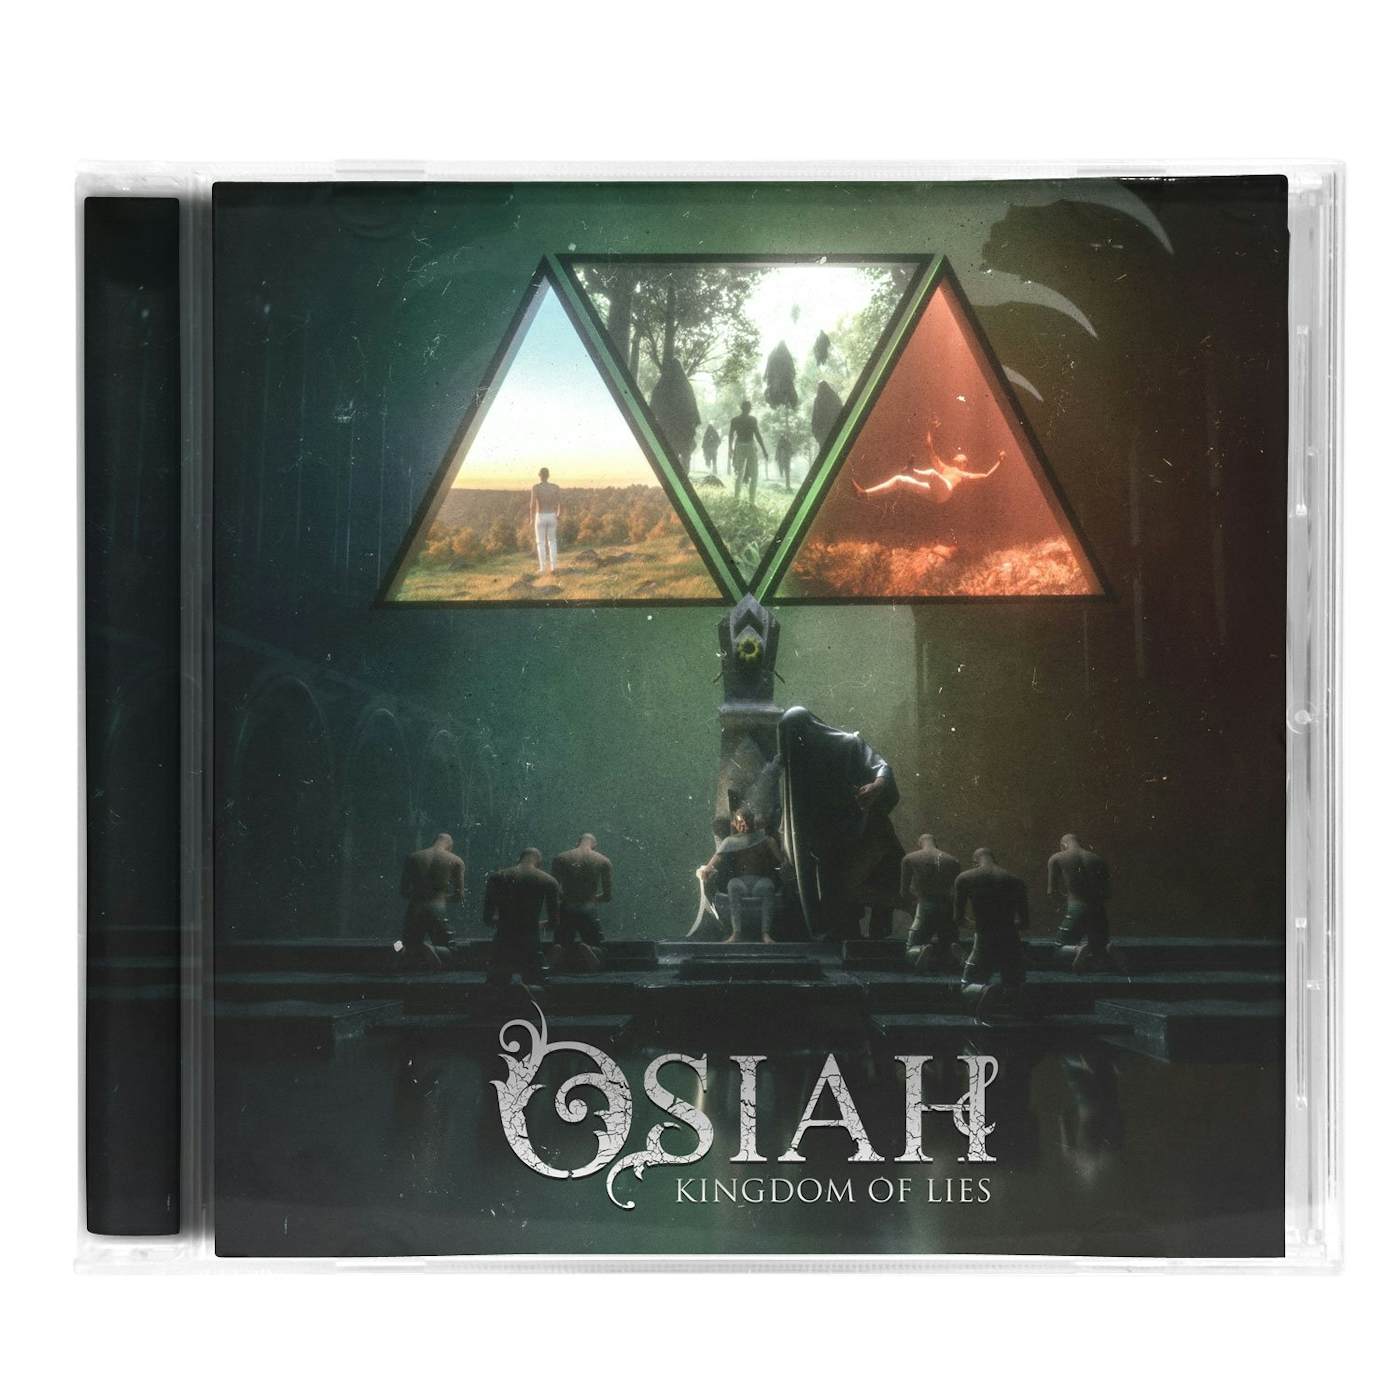 Osiah "Kingdom of Lies" Special Edition CD